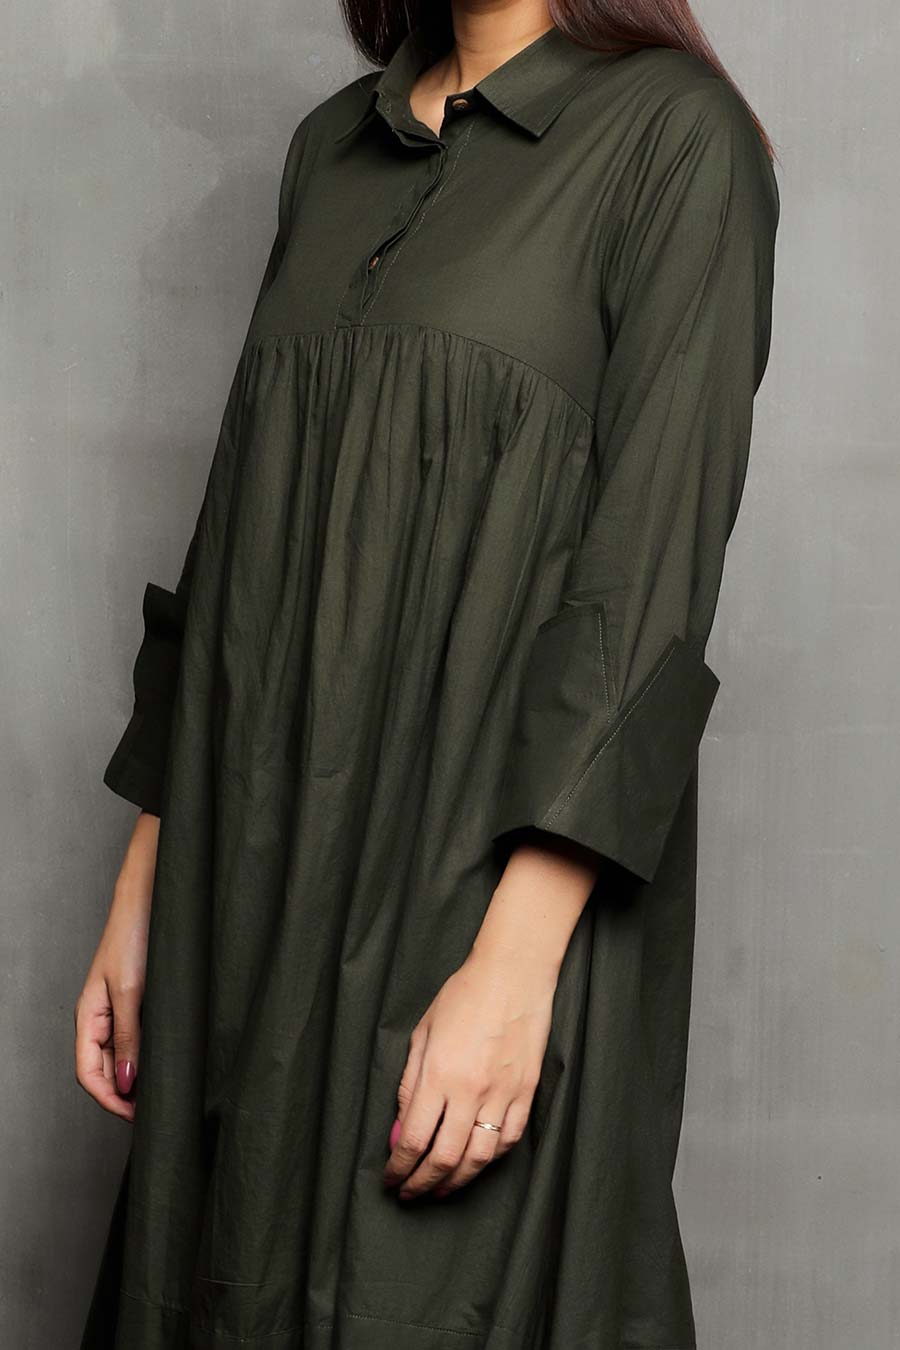 ARYAN - Olive Green Tunic Dress